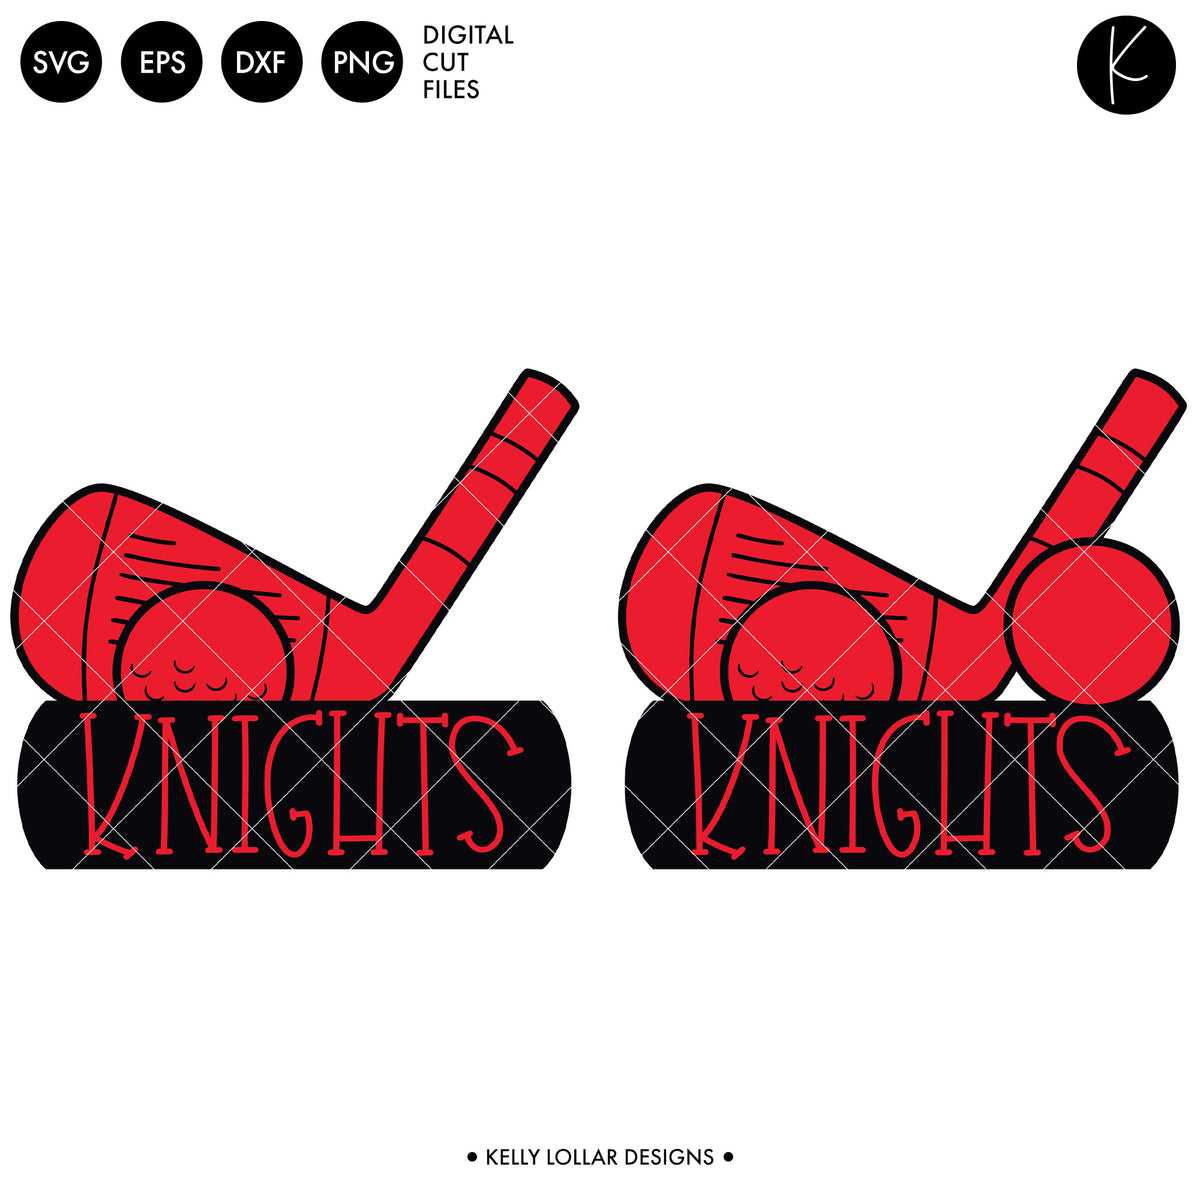 Knights Golf Bundle | SVG DXF EPS PNG Cut Files